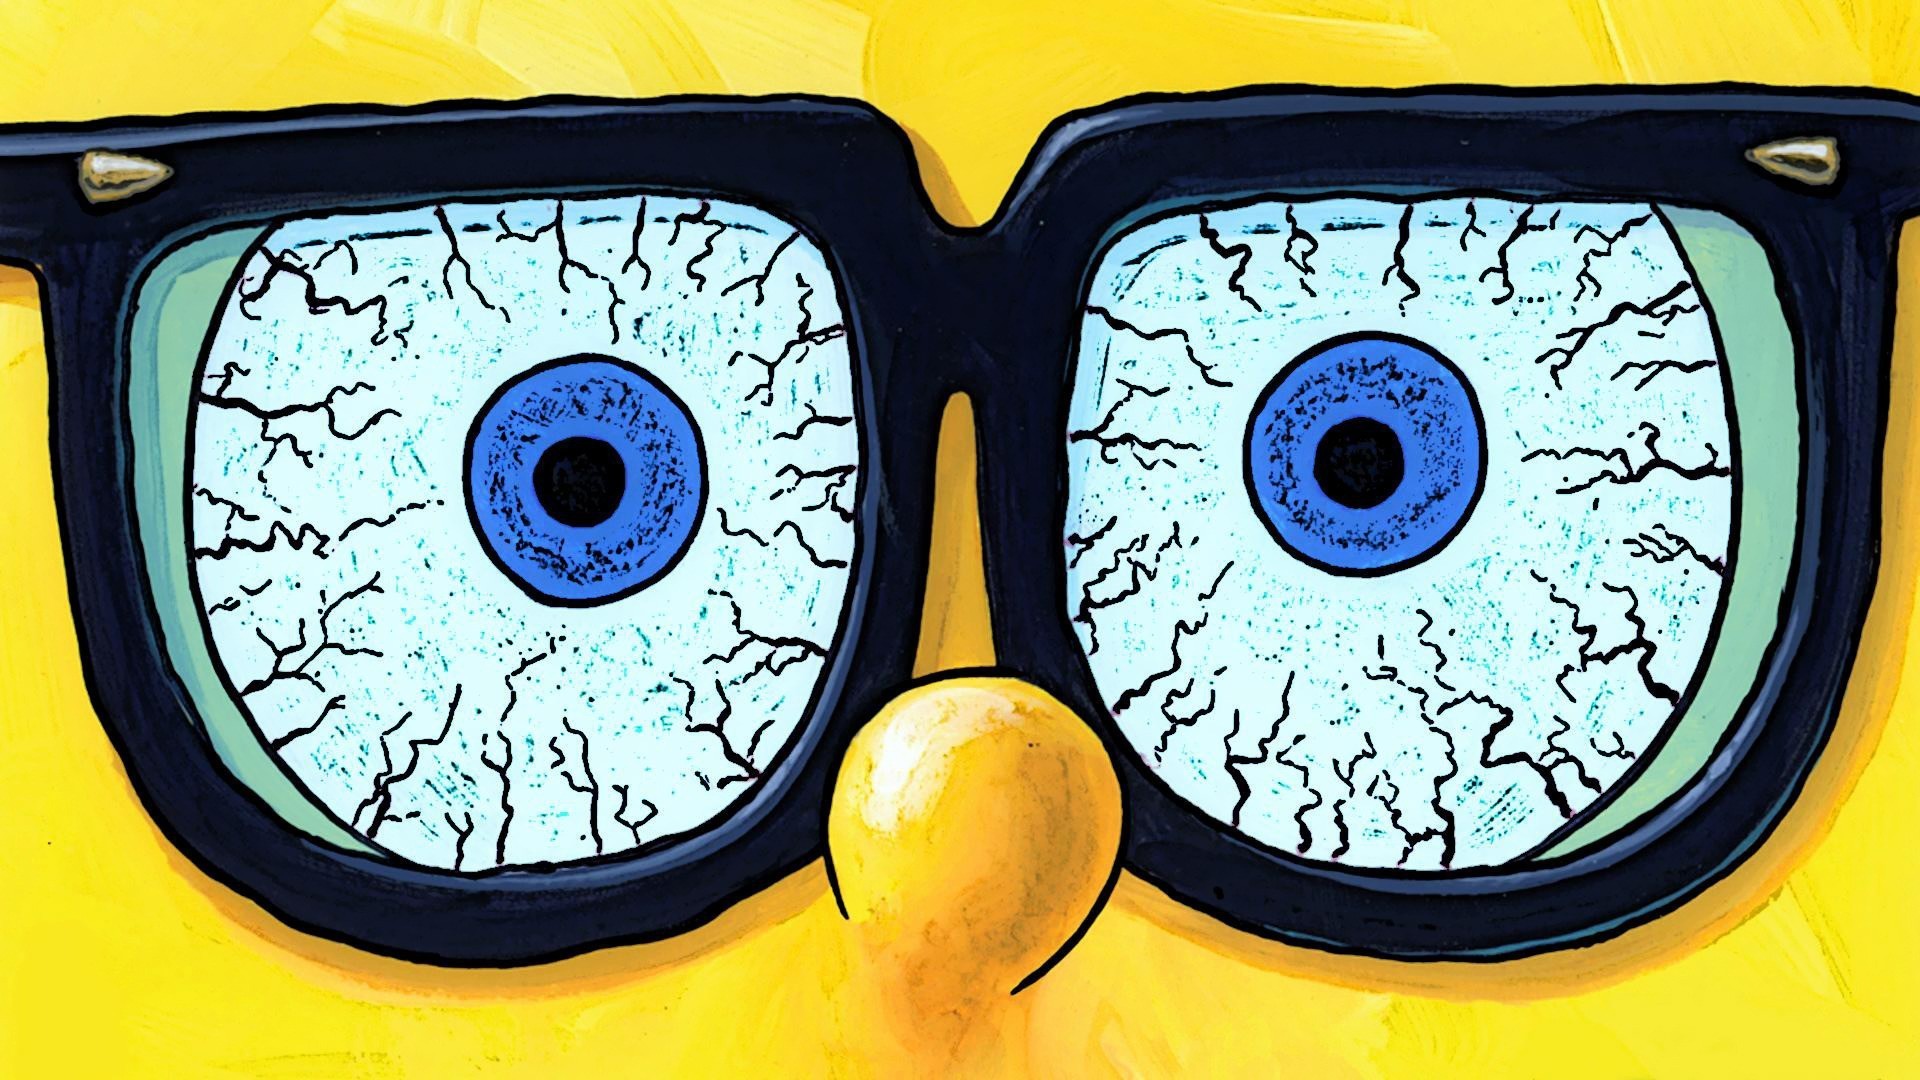 Spongebob Squarepants Full HD Wallpaper And Background Image